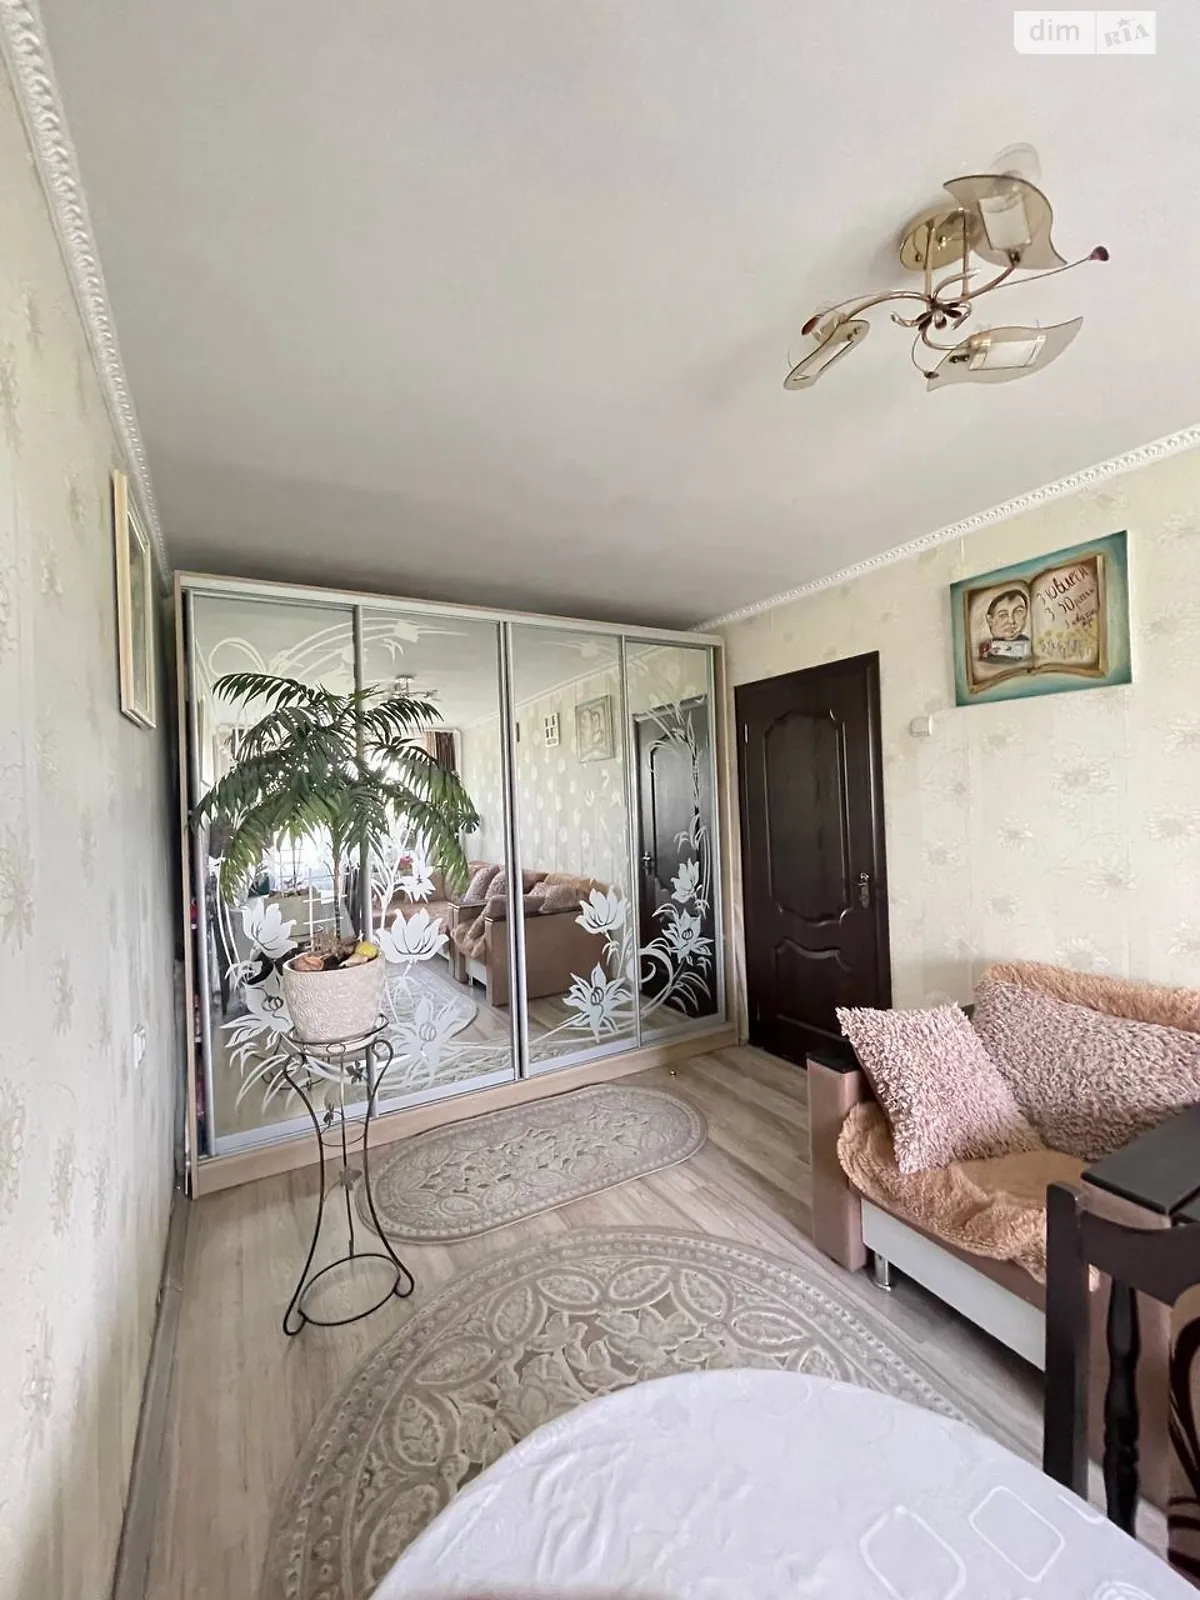 Продается комната 21.5 кв. м в Ровно - фото 3